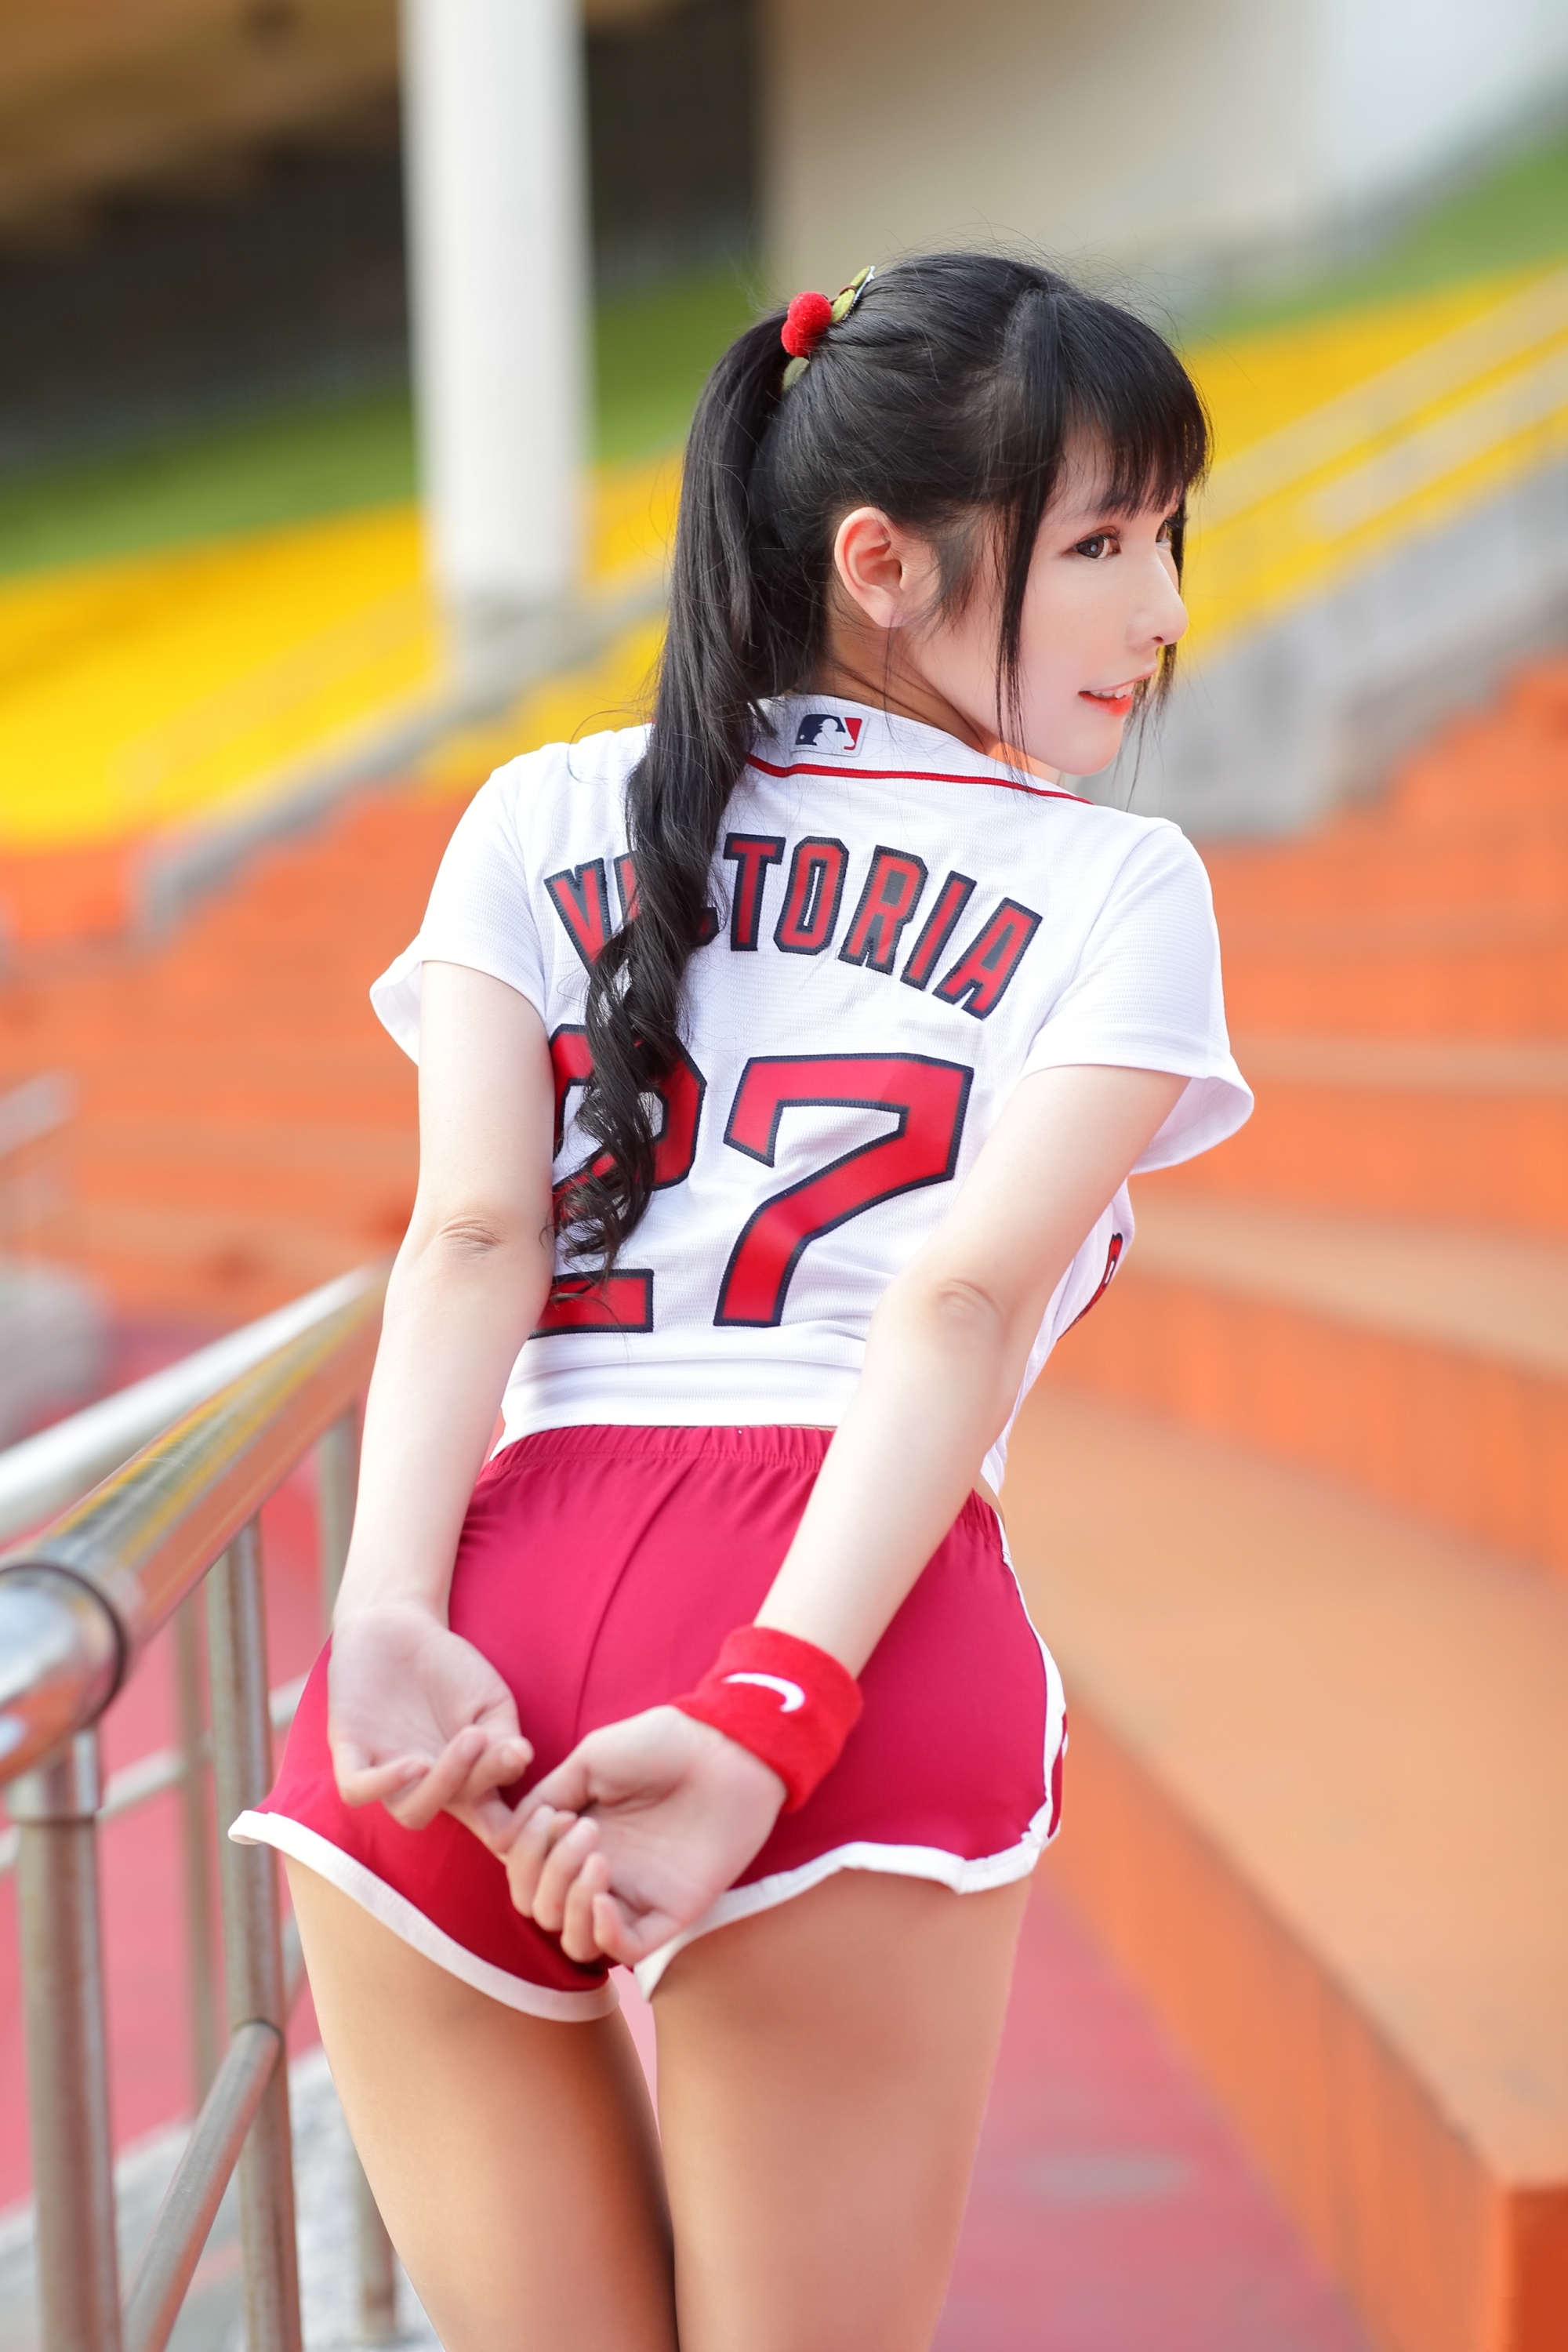 Vicky Women Model Asian Bangs Ponytail Baseball Profile Smiling T Shirt Stadium Depth Of Field Verti 2000x3000